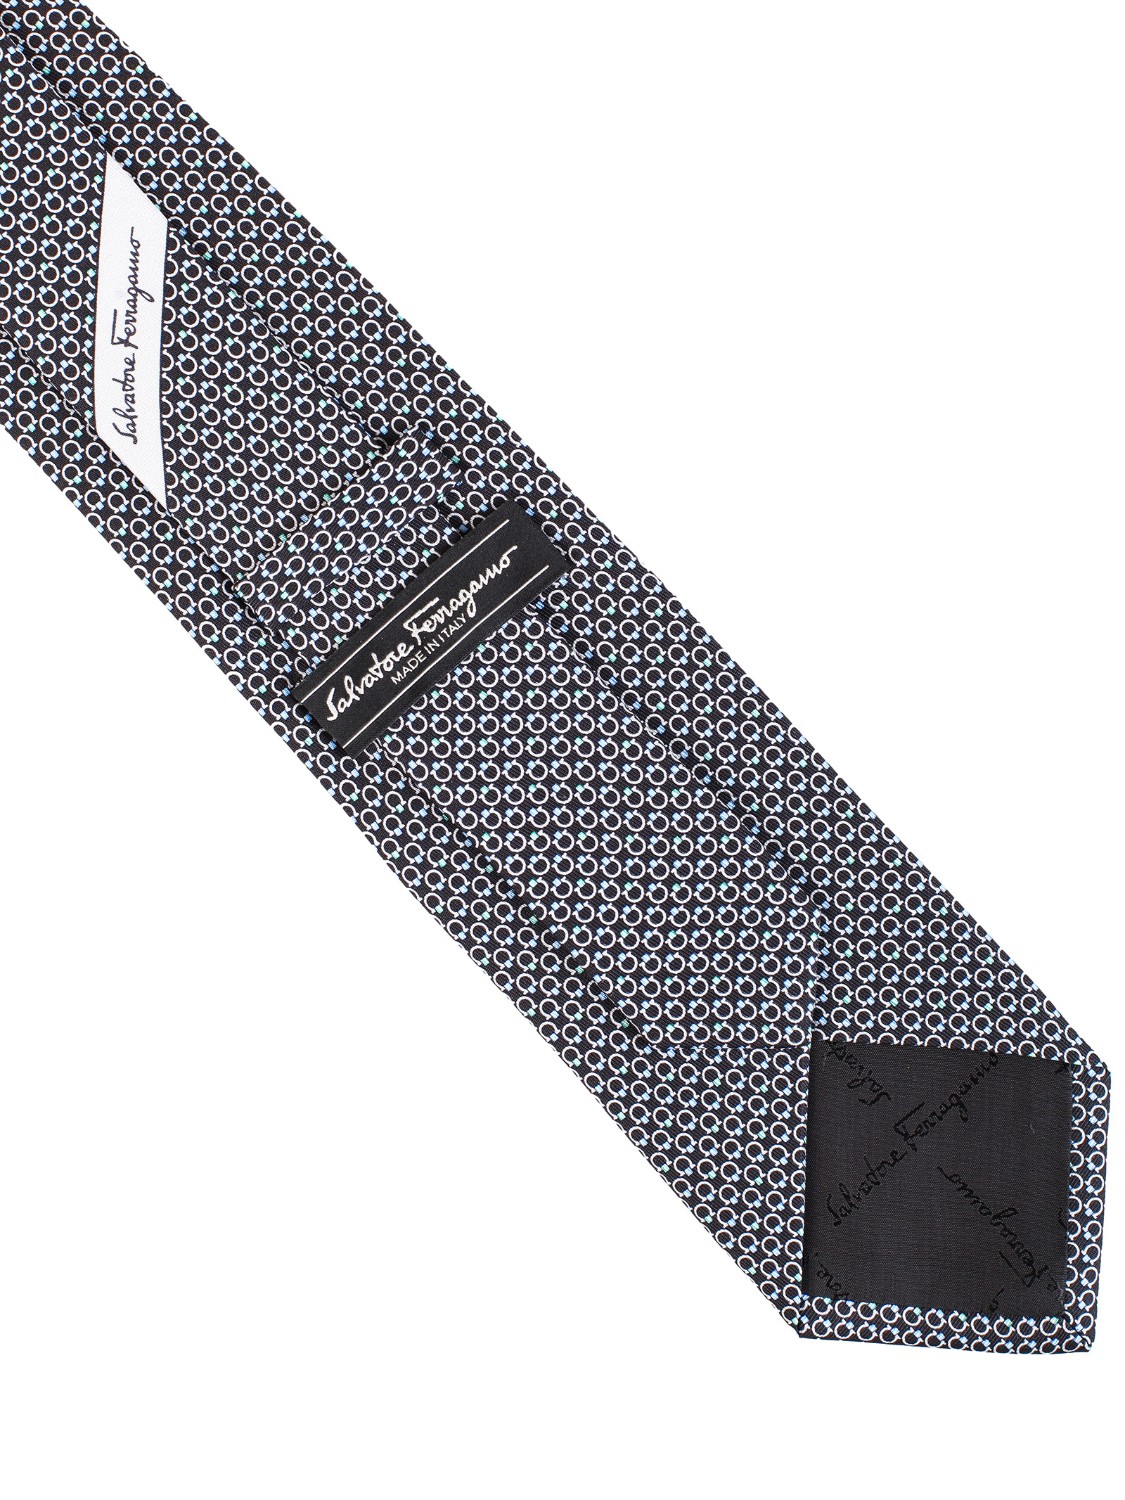 shop SALVATORE FERRAGAMO  Cravatta: Salvatore Ferragamo cravatta in seta stampa Gancini.
Composizione: 100% seta.
Made in Italy.. 357405 ENERGIA-001 681944 number 3266945